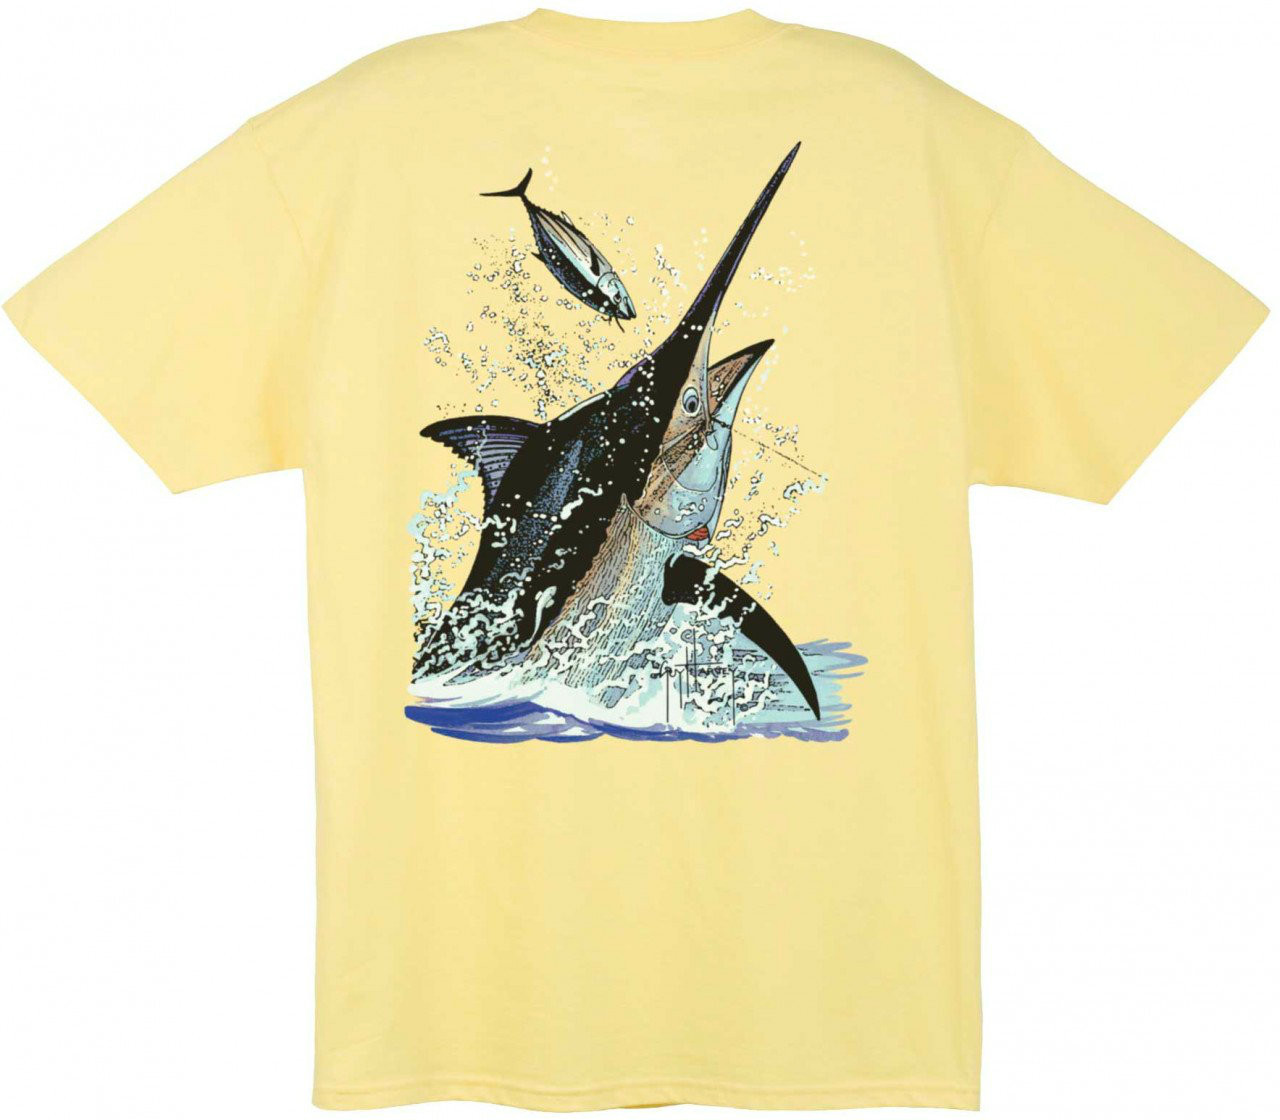 GUY HARVEY Fish Marlin Sport Fishing Aqua Shirt Men's T-Shirt Size L Cotton